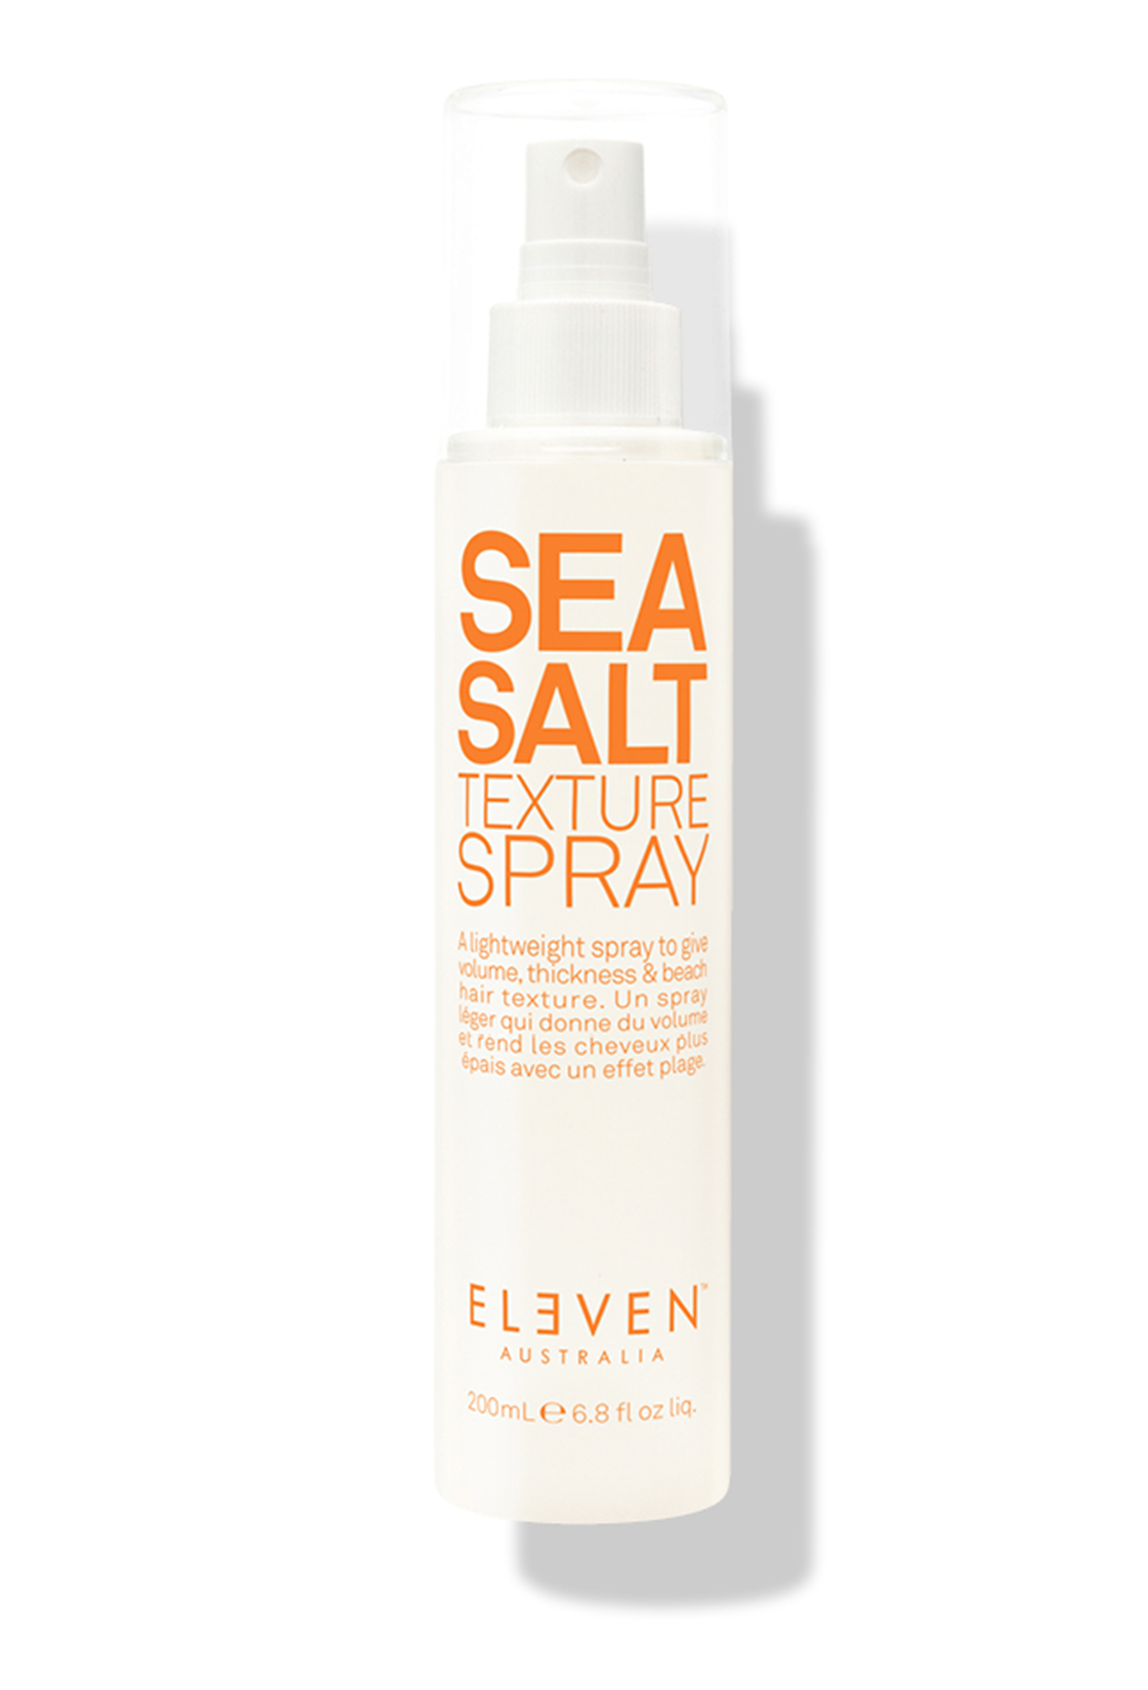 Sea Salt Texture Spray ElevenAustralia Buy Online